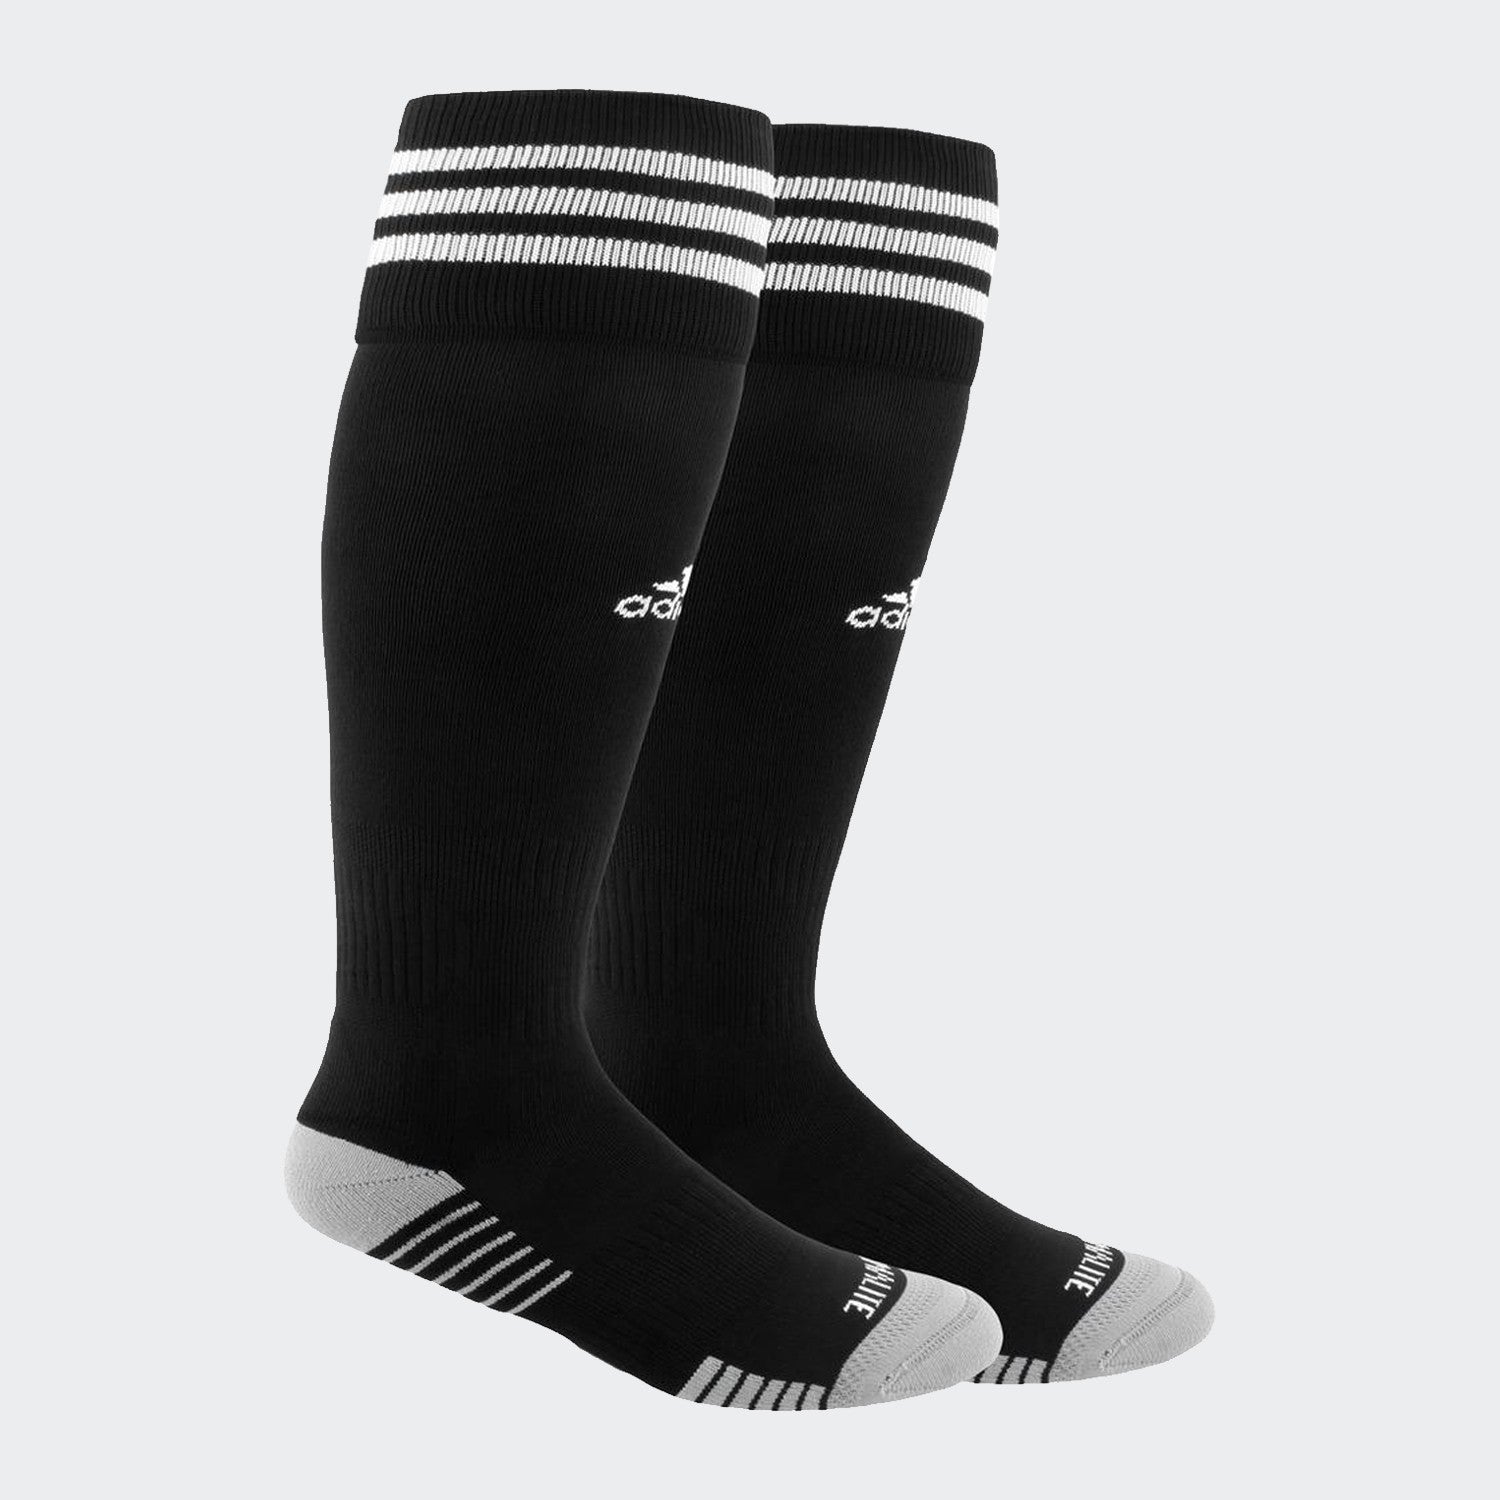 Copa Zone Cushion IV Soccer Sock Black/White Small (13C-4Y)